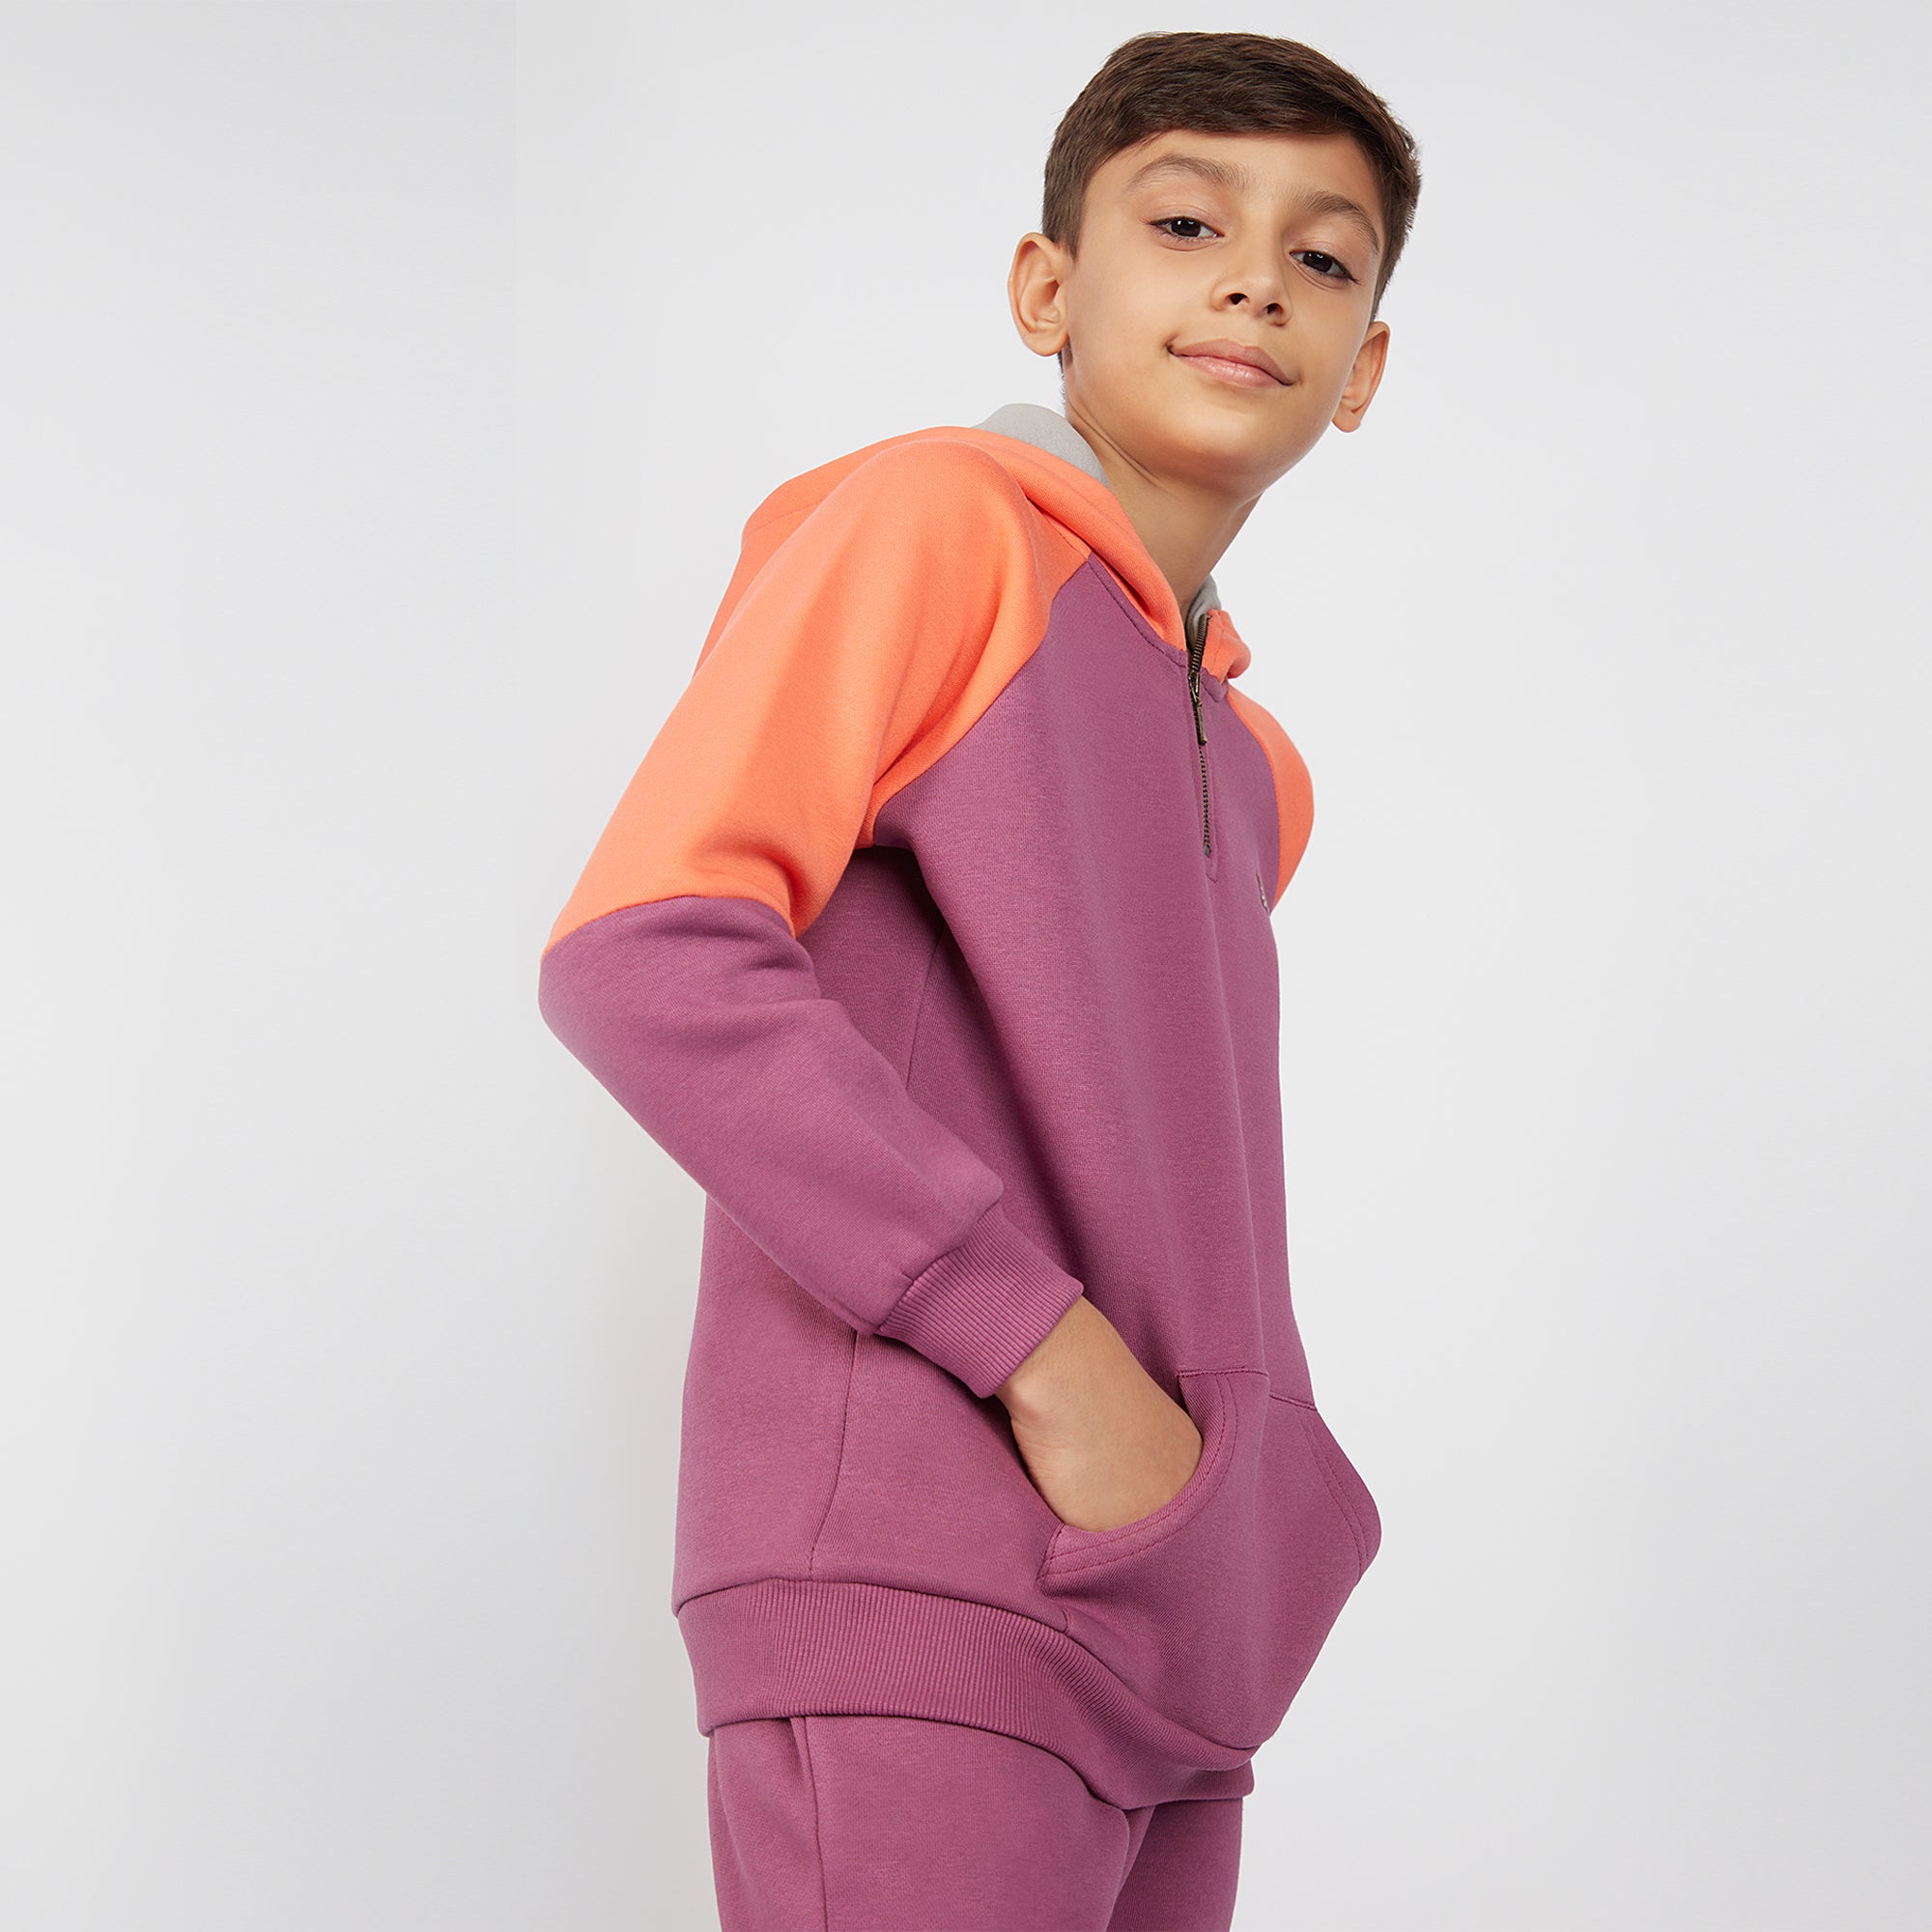 Bombay High Boy's Purple Color Block Knit Zip-up Hoodie